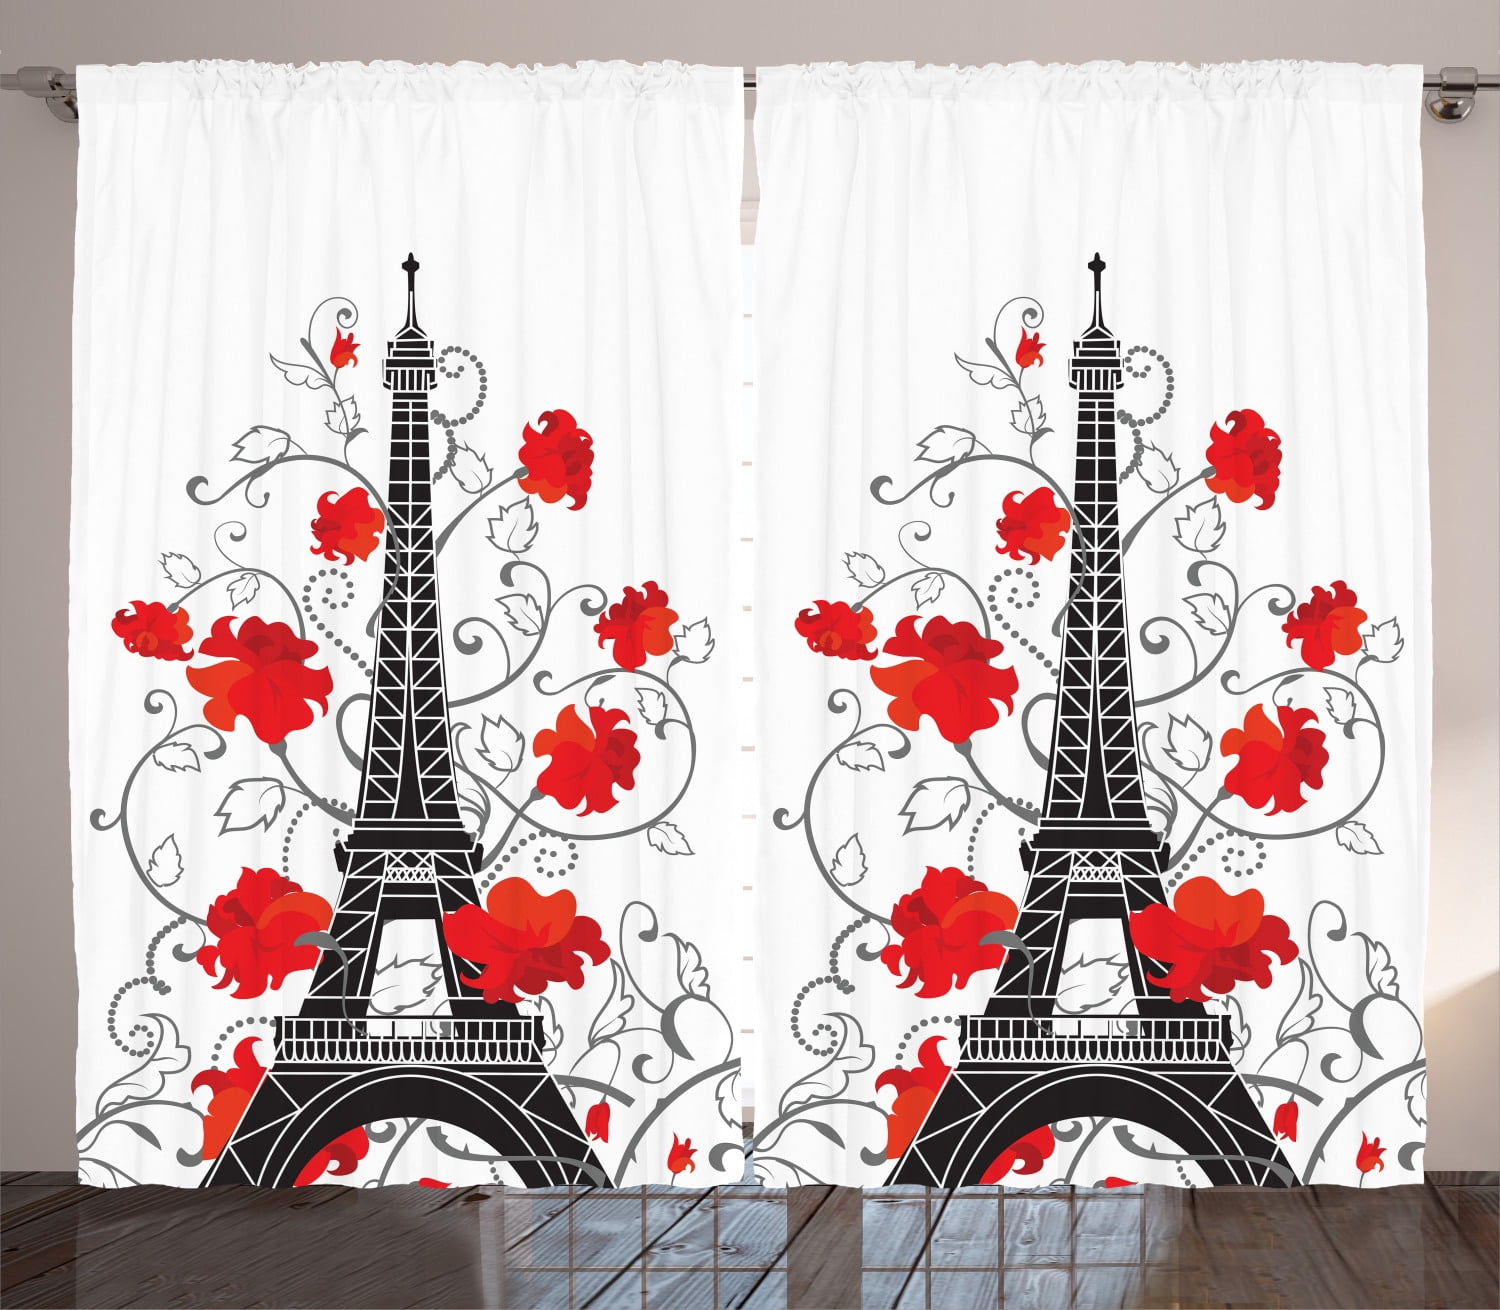 Window Curtain Fabric Eiffel Tower Bicycle Flower Basket Blackout Drapes 2Panels